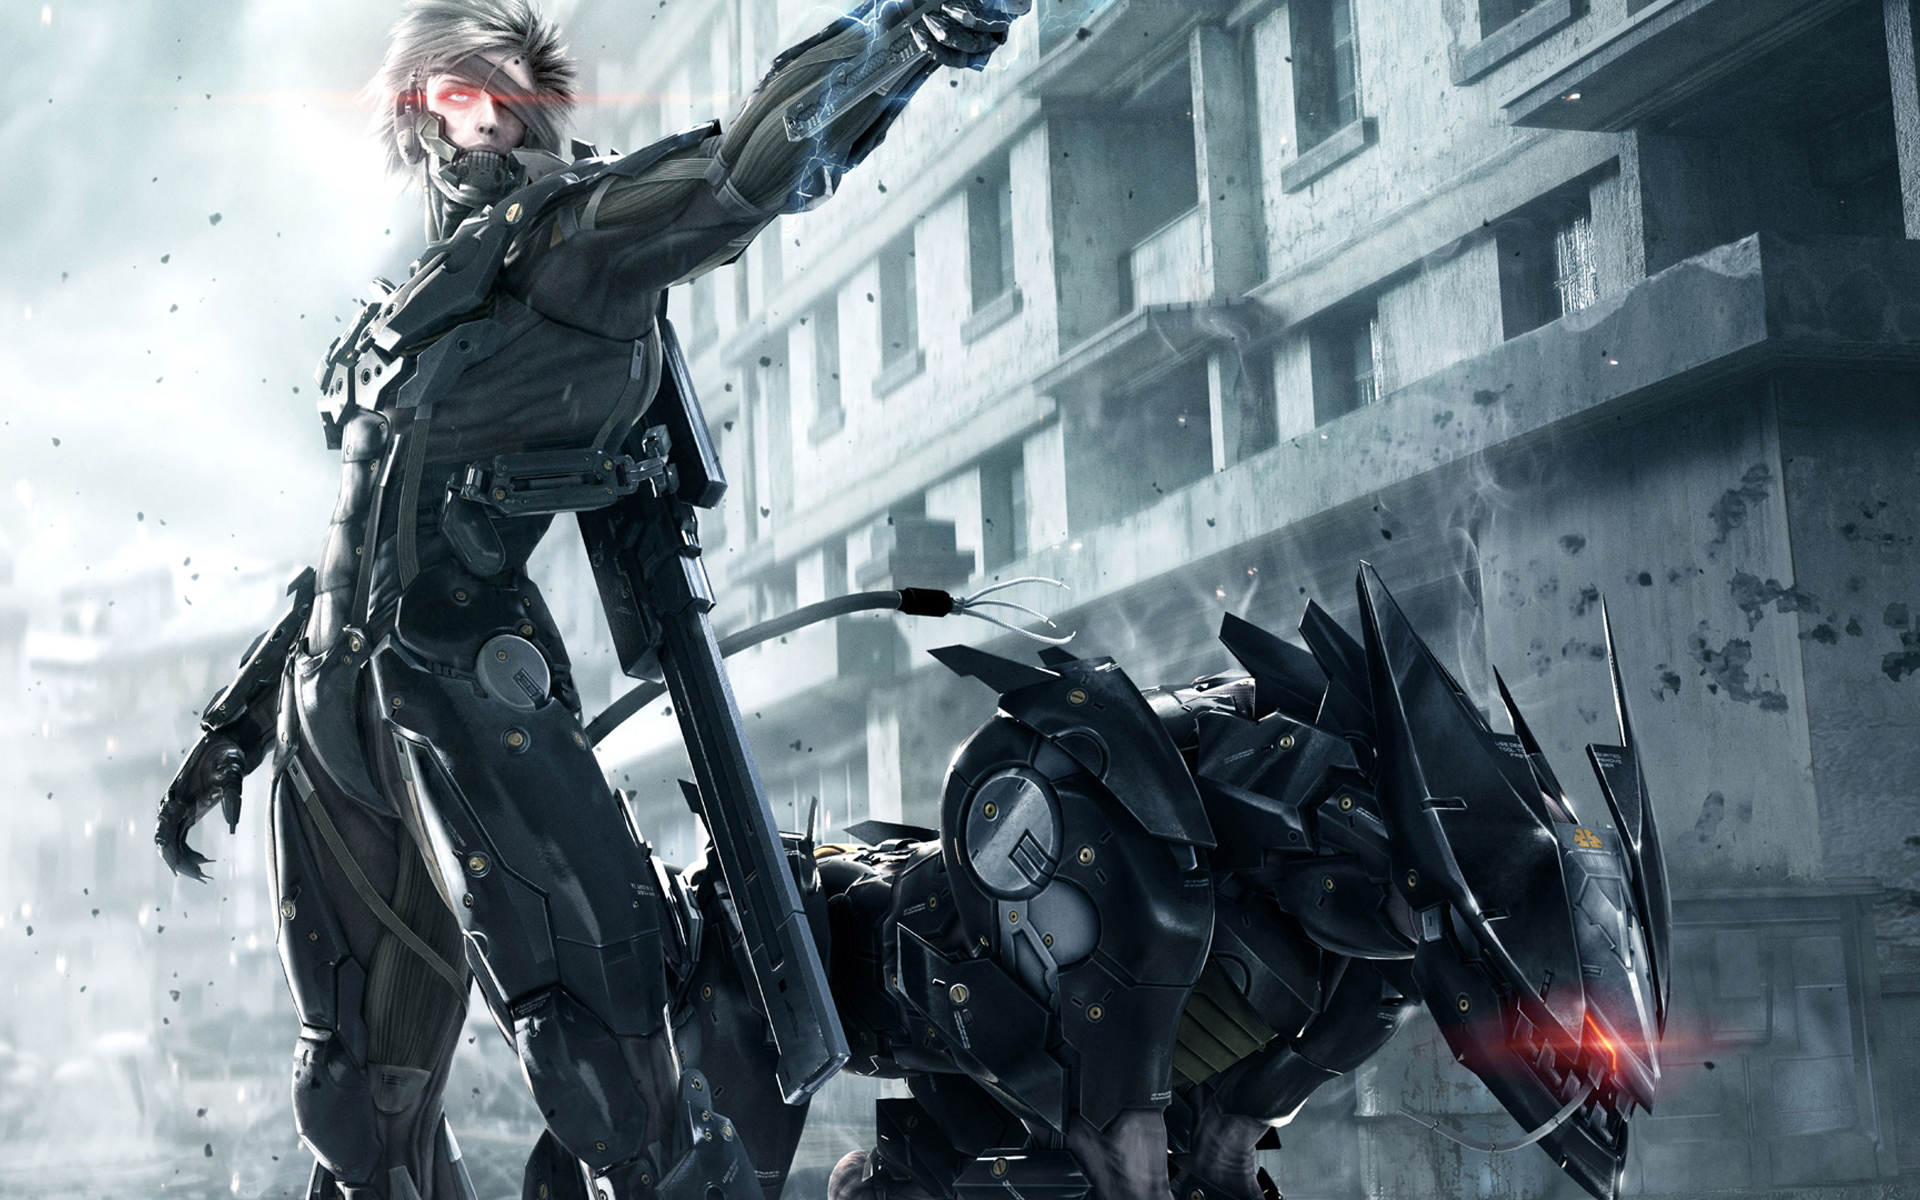 Обзор Metal Gear Rising: Revengeance